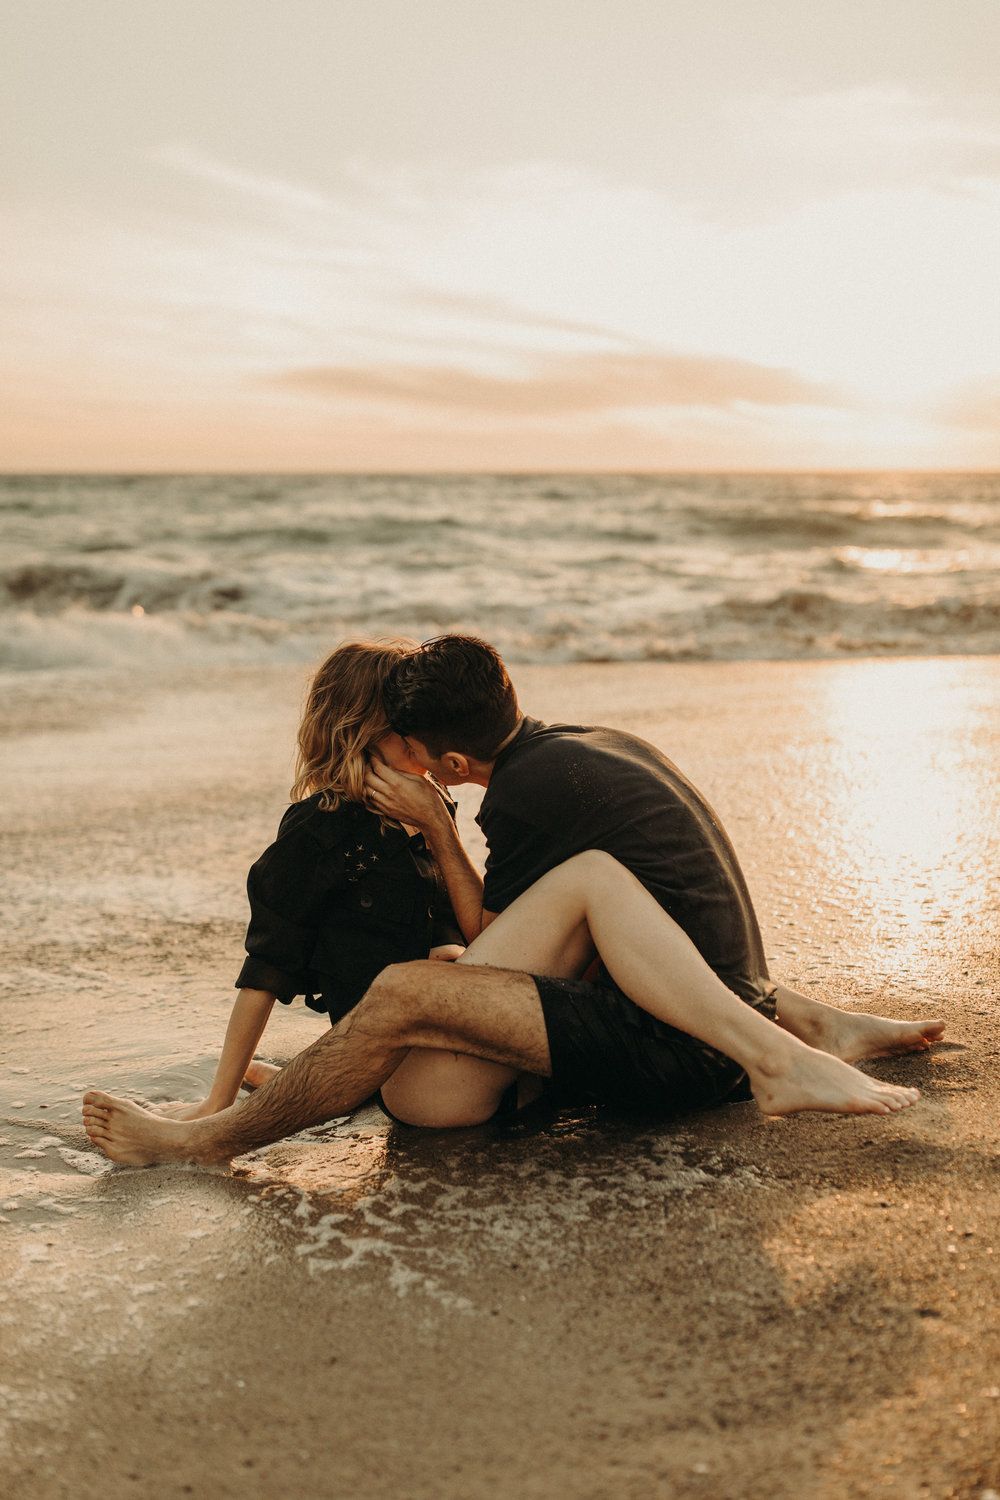 Картинка про любовь к мужчине. Влюбленные на море. Романтика для девушки. Пара на пляже. Объятия на море.